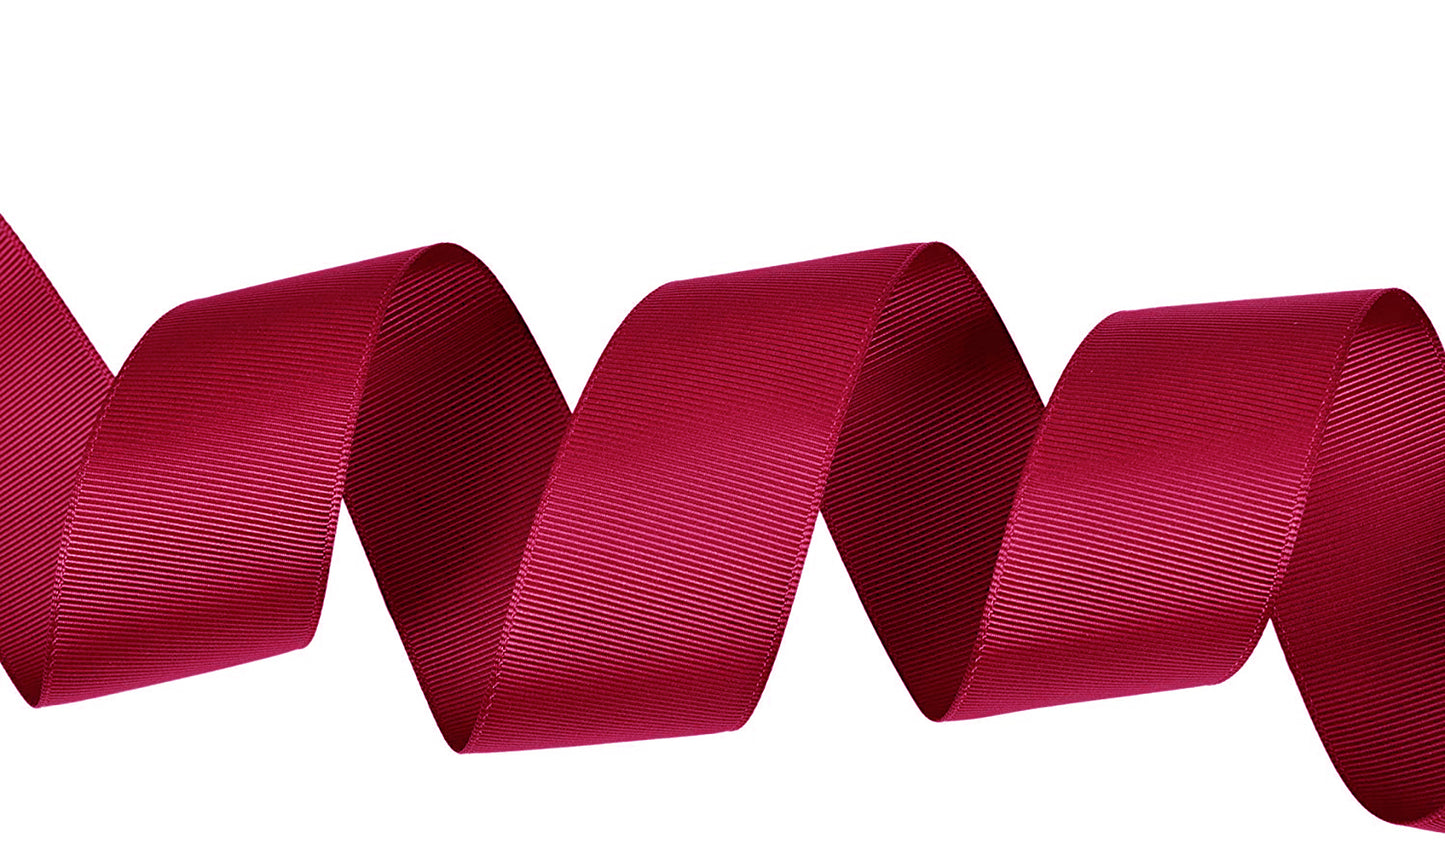 5 Yards Solid Azalea Pink Grosgrain Ribbon Yardage DIY Crafts Bows Décor USA